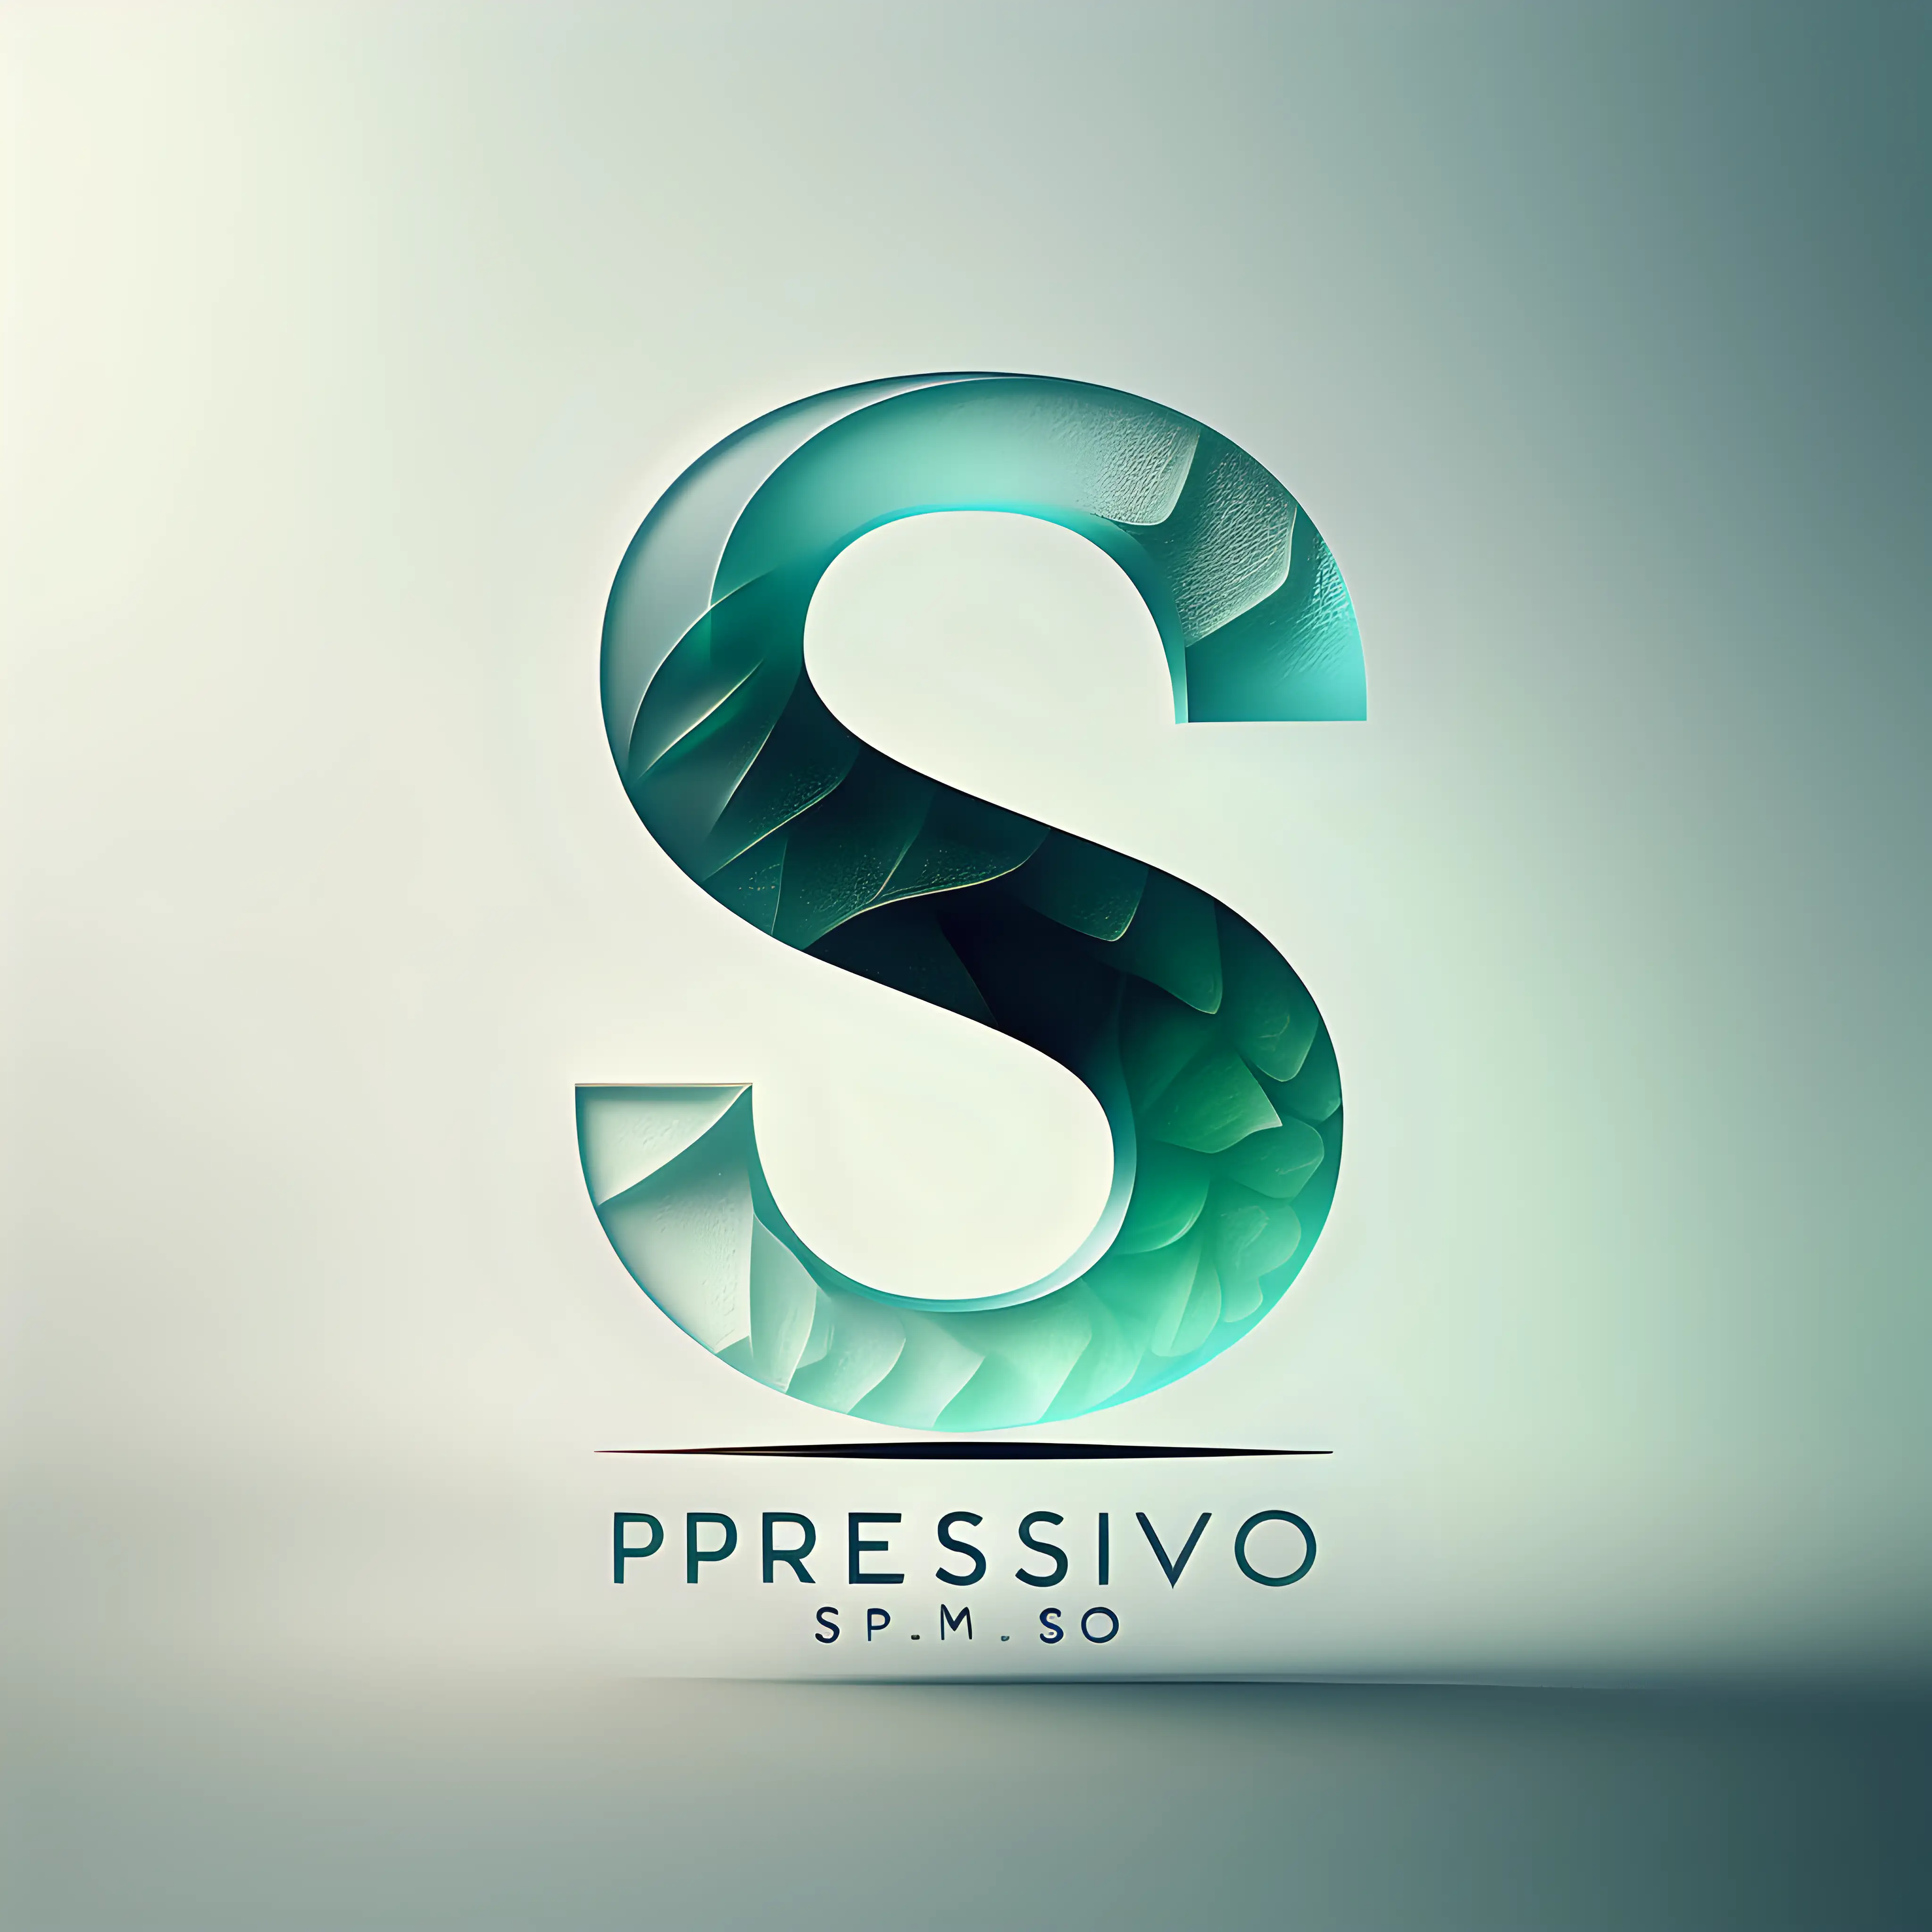 S Pressivo Logo Simple and Elegant PostModern Conceptual Design in Ice Blue and Jade Green